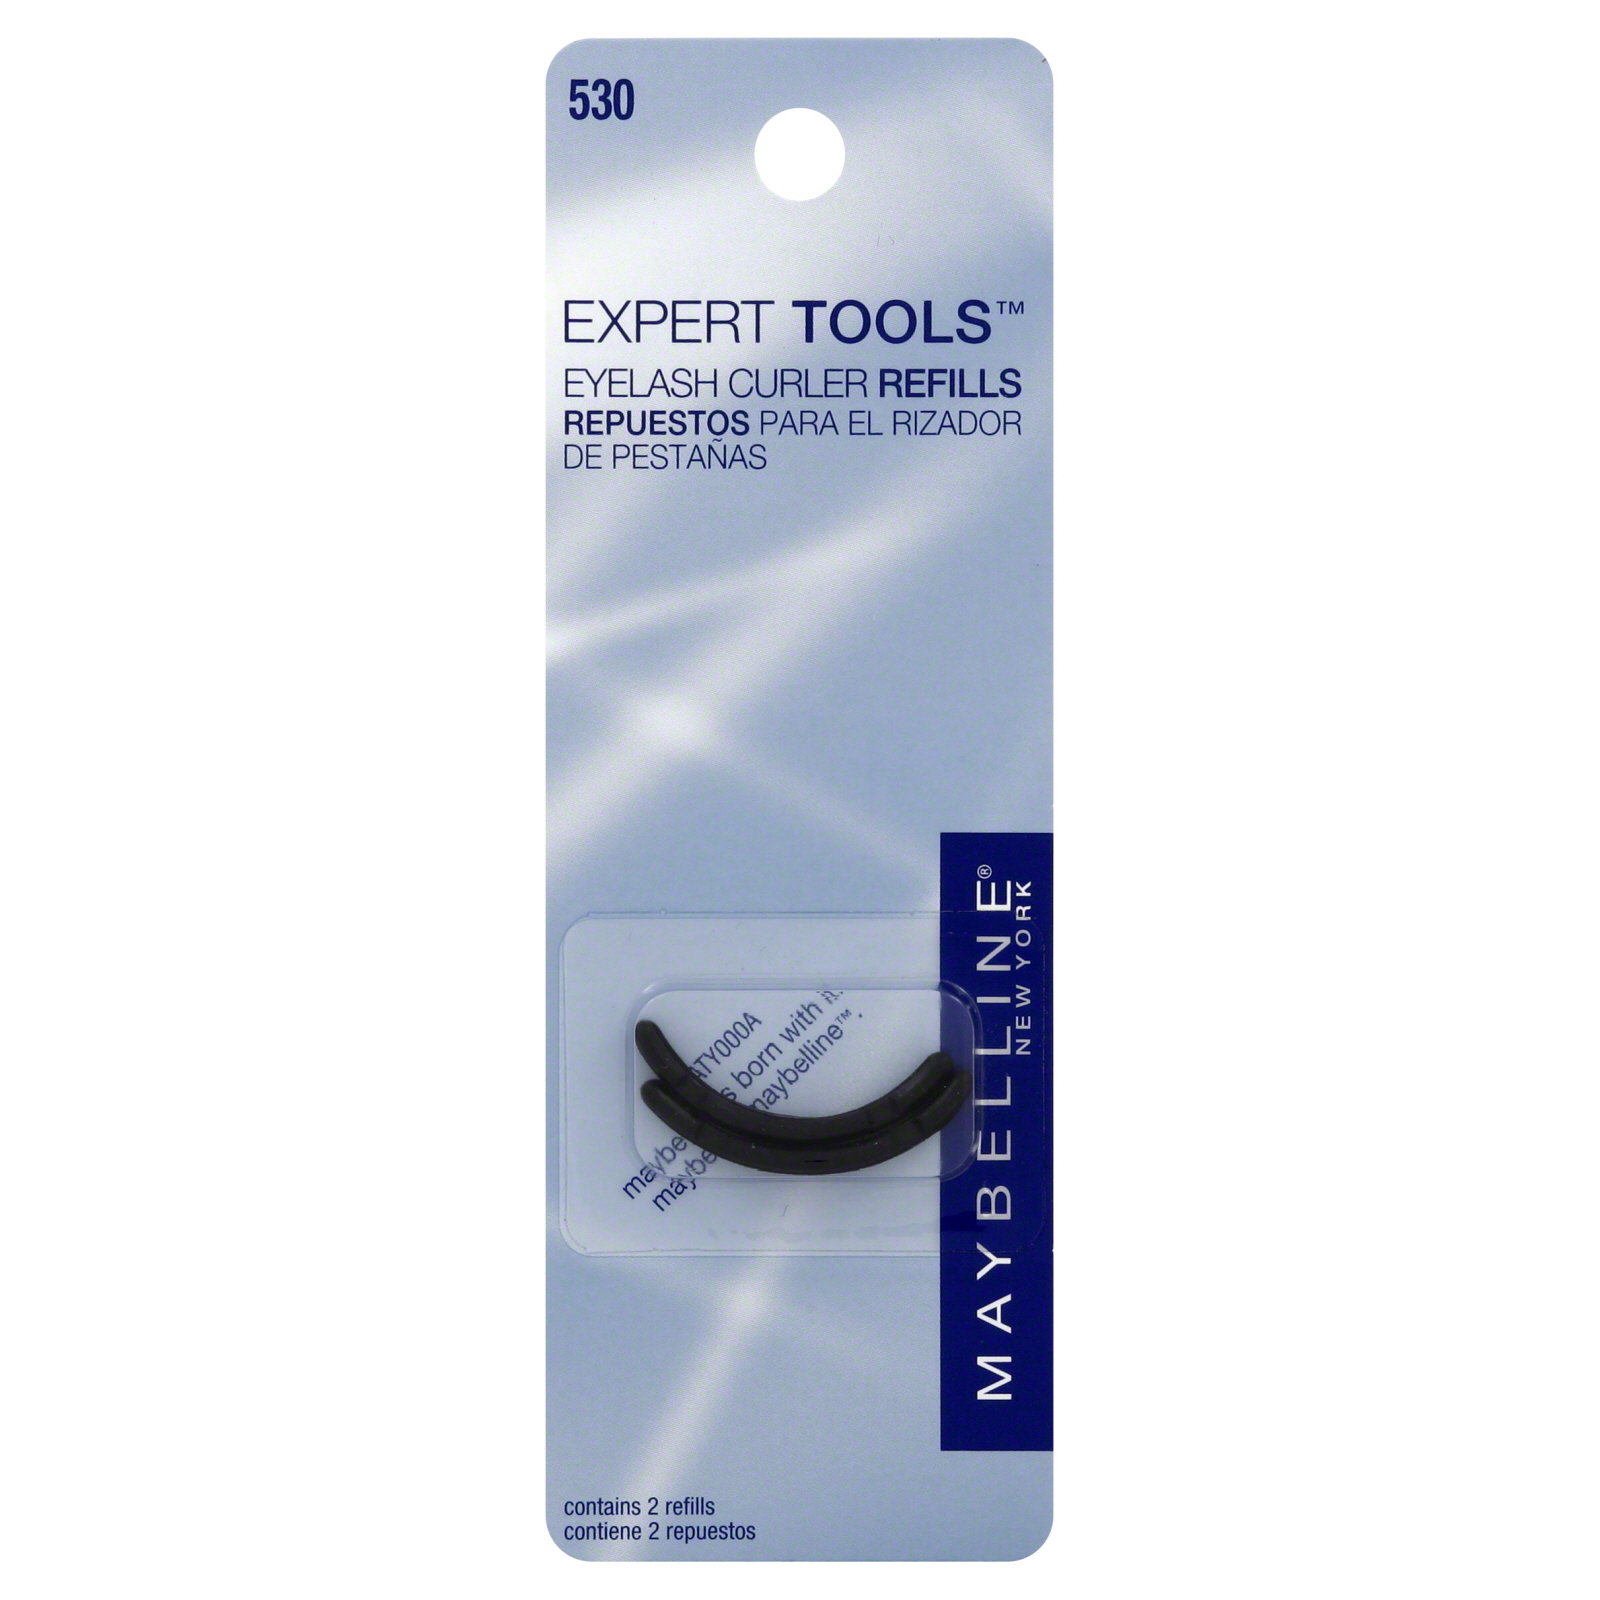 Maybelline New York Expert Tools Eyelash Curler Refills, 530, 2 refills